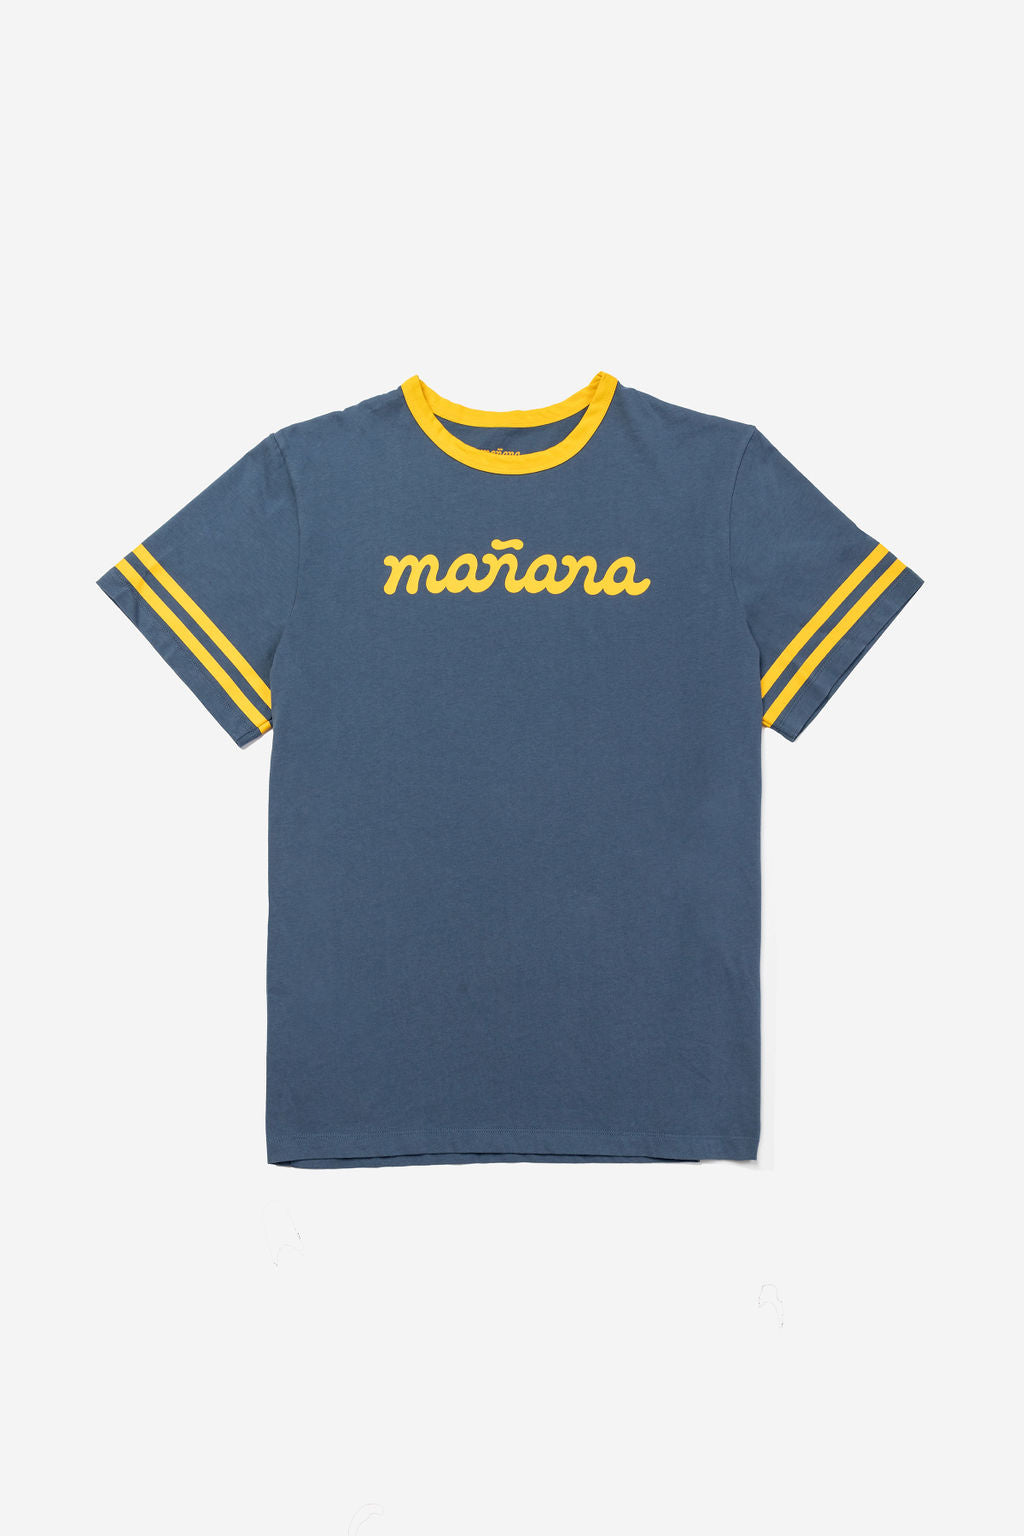 Blue tee shirt with Manana branding